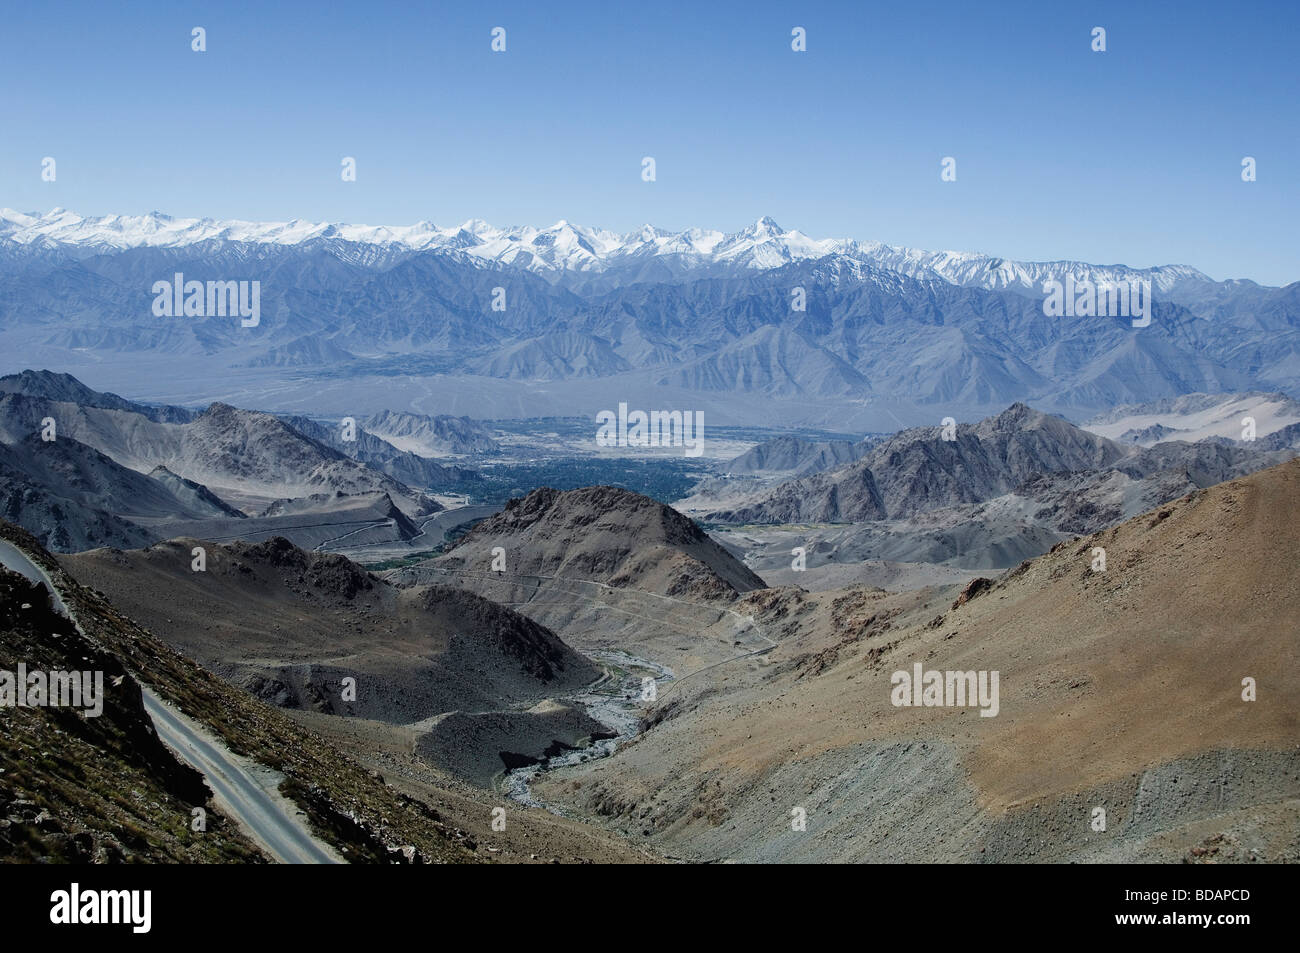 Panoramic view of a mountain range, Himalayas, Ladakh, Jammu And Kashmir, India Stock Photo